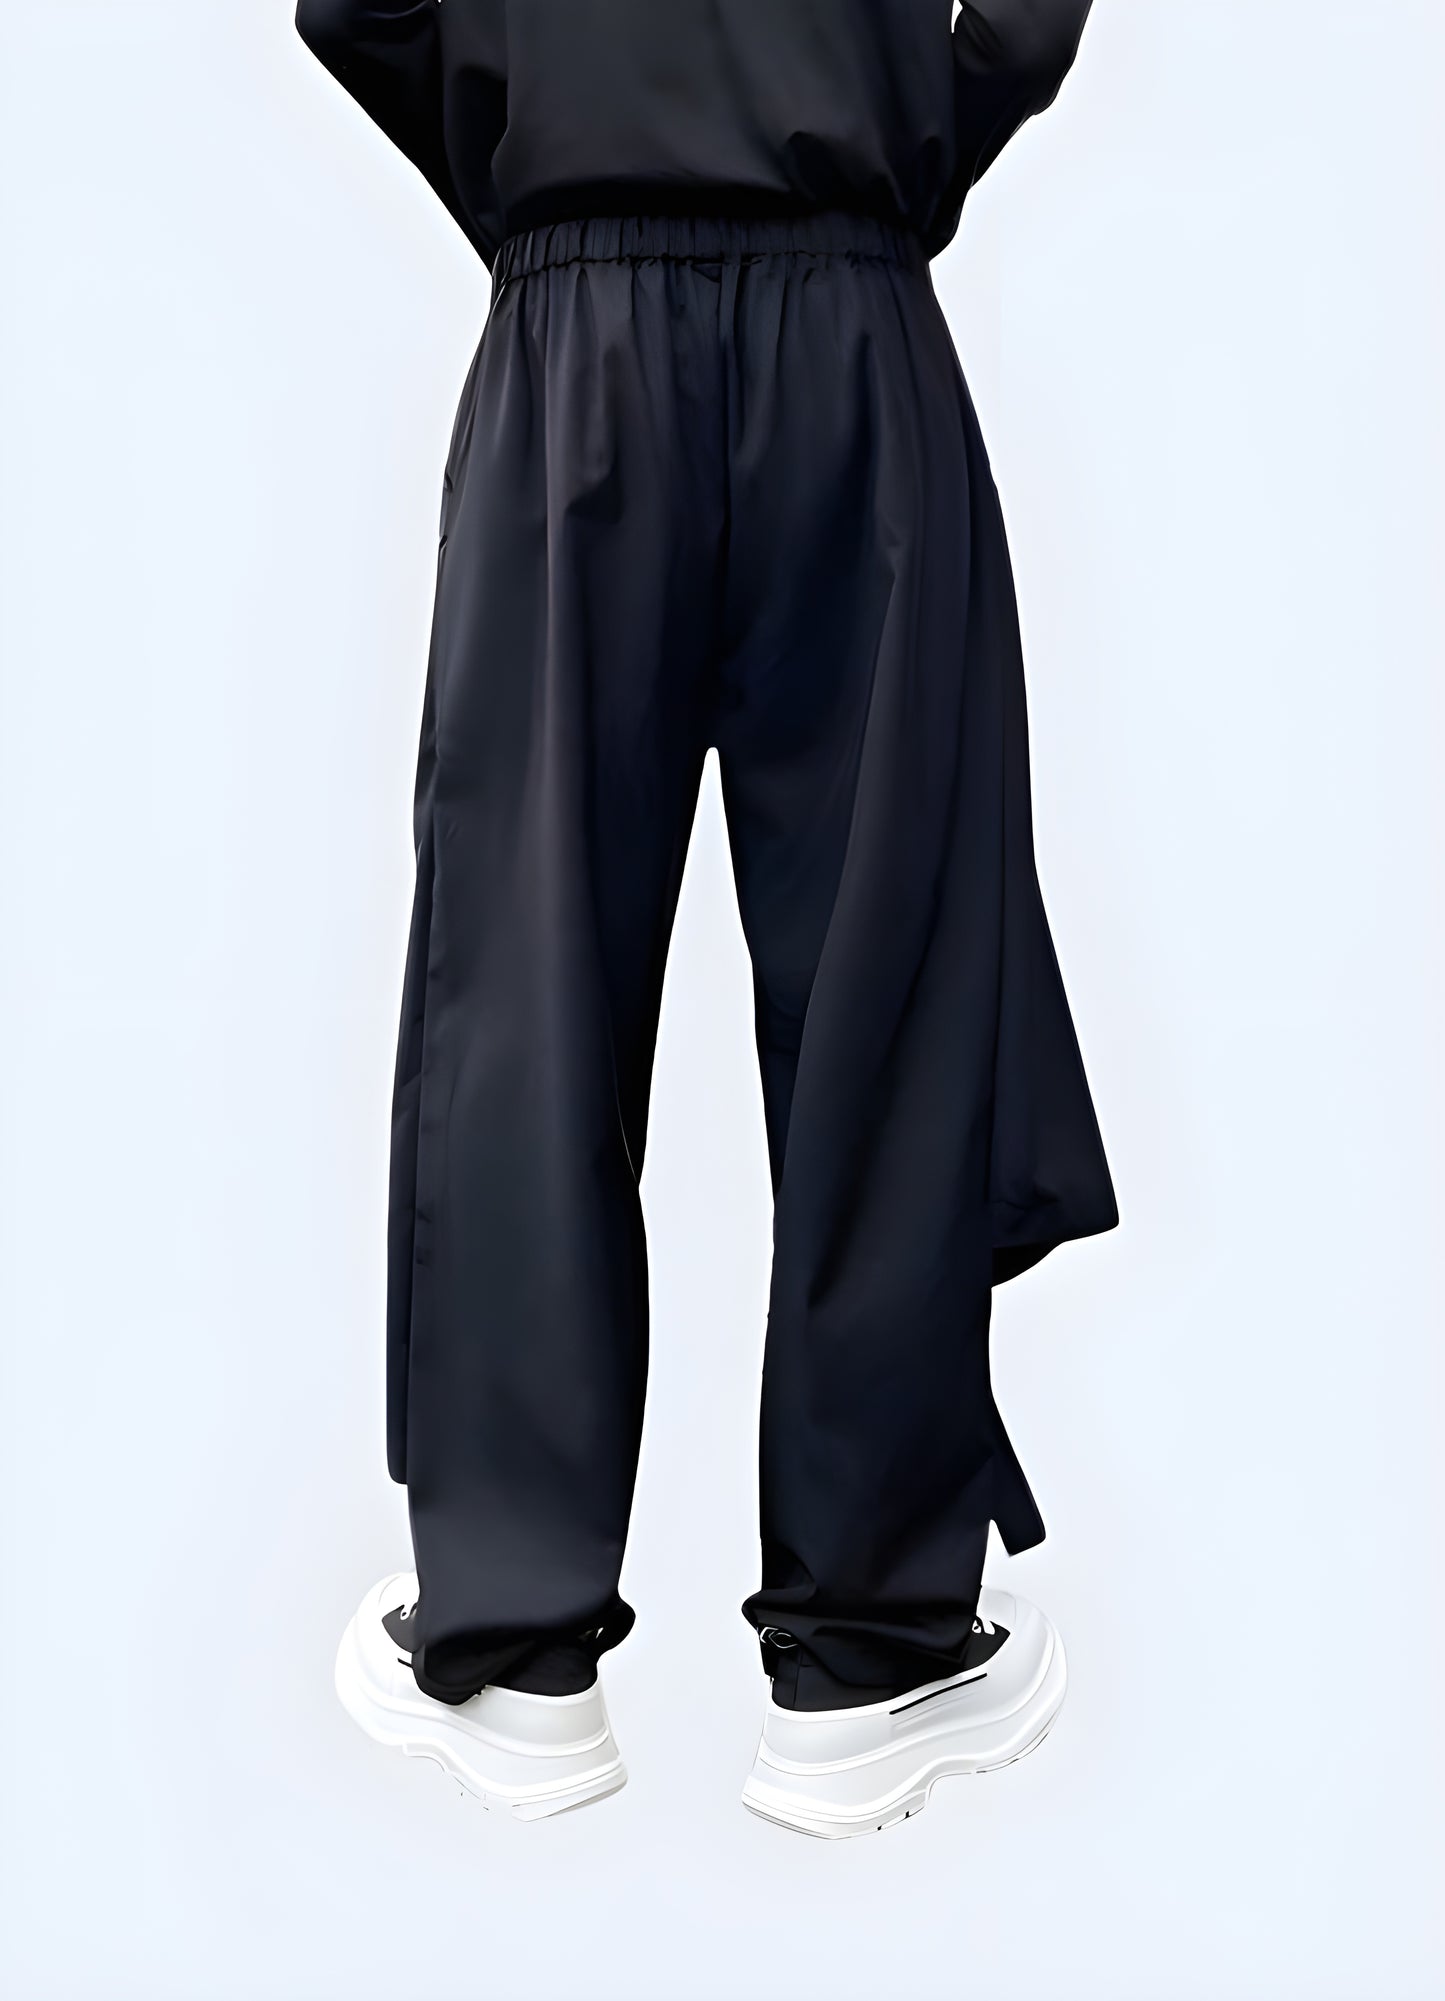 Multiple layers black hakama pants.